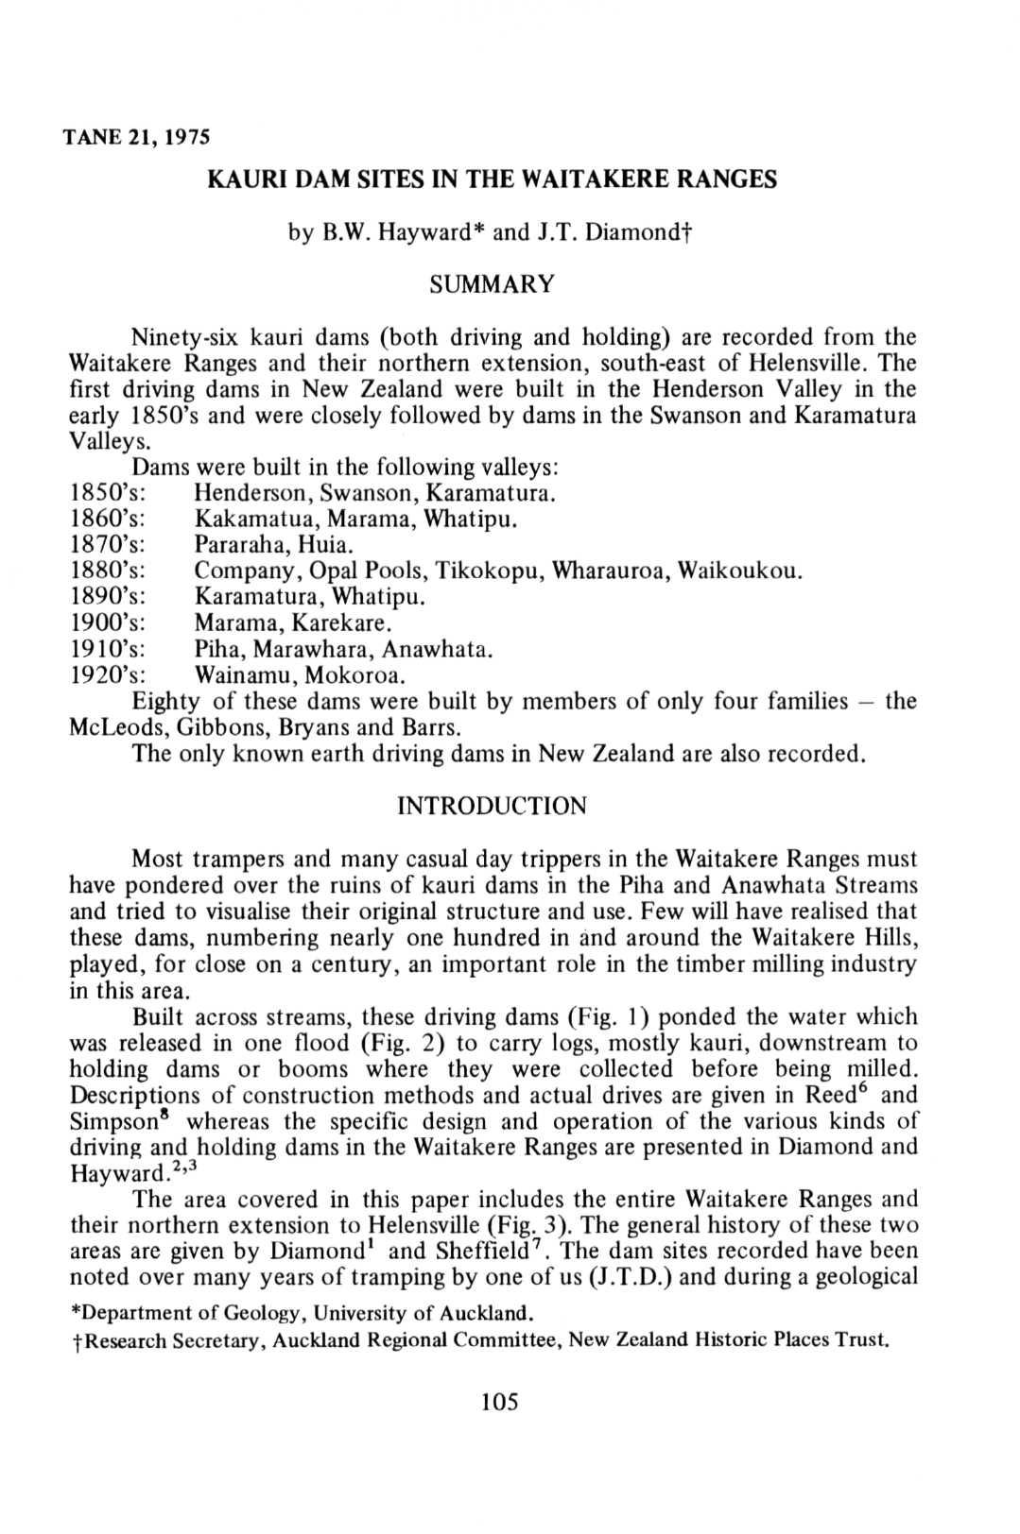 KAURI DAM SITES in the WAITAKERE RANGES by BW Hayward* and JT Diamond F SUMMARY Ninety-Six Kauri Dams